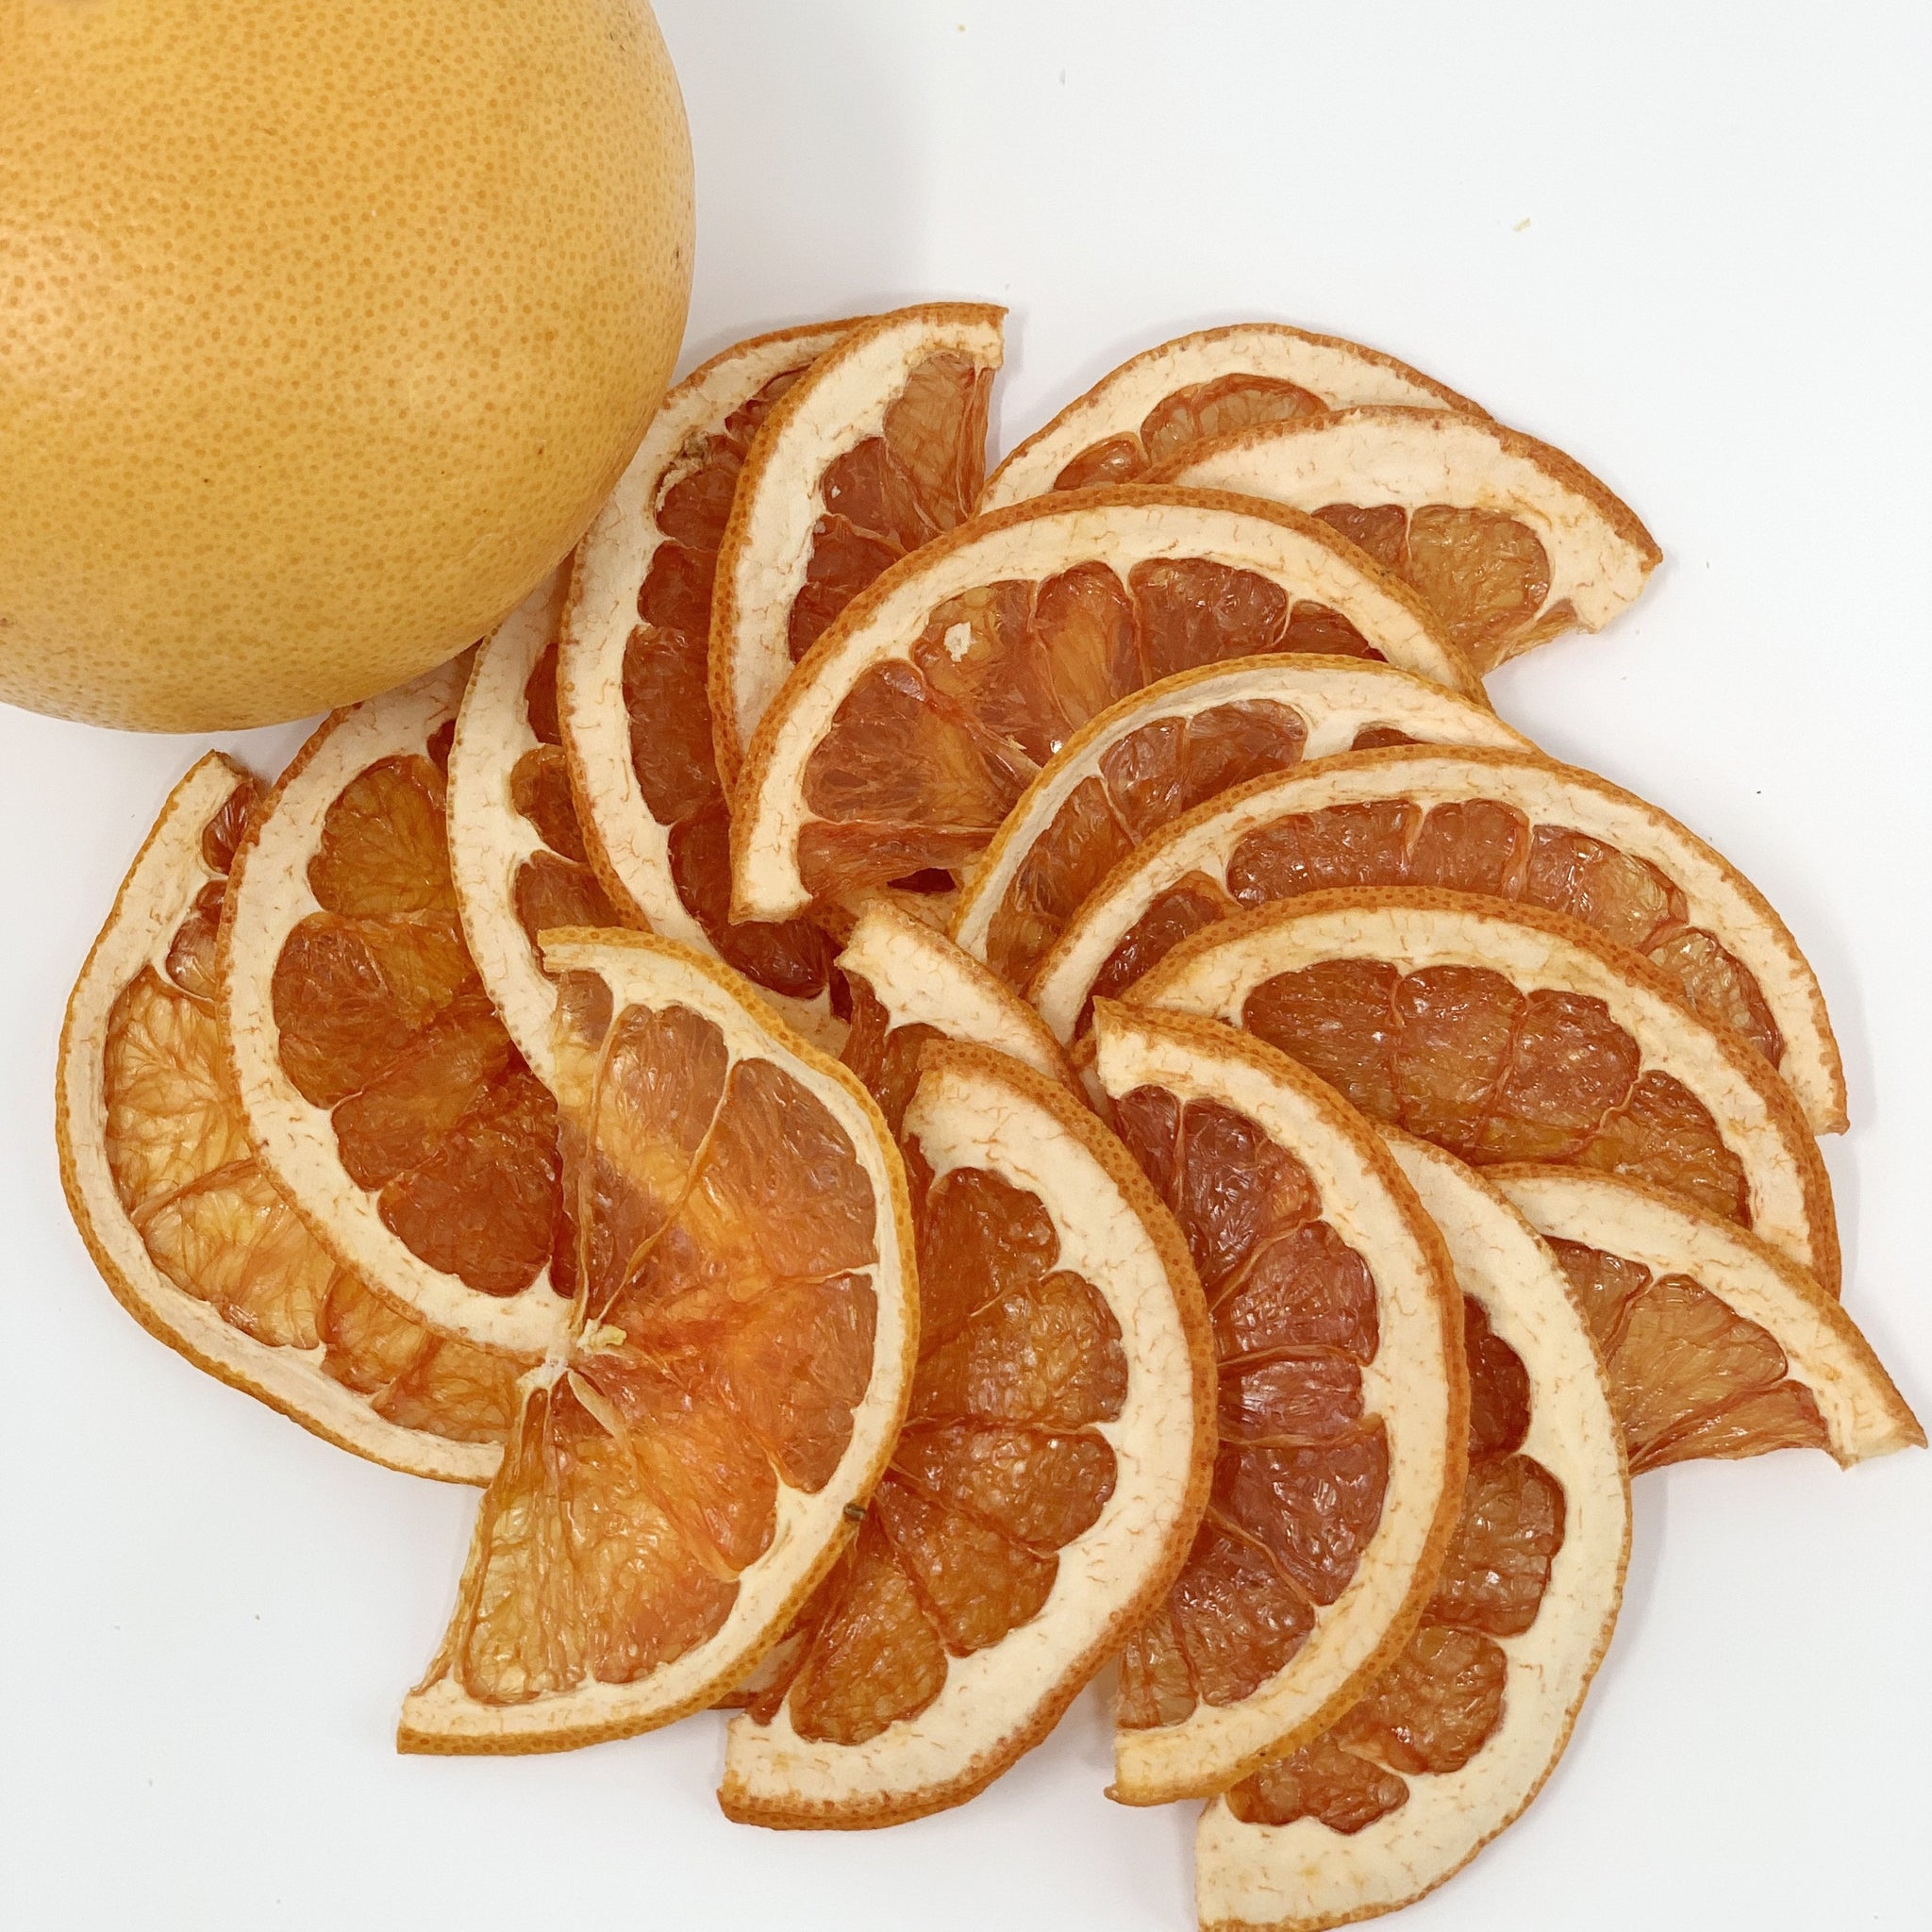 25 Piece Dehydrated Fruit Cocktail Garnish Organic Oranges, Lemons